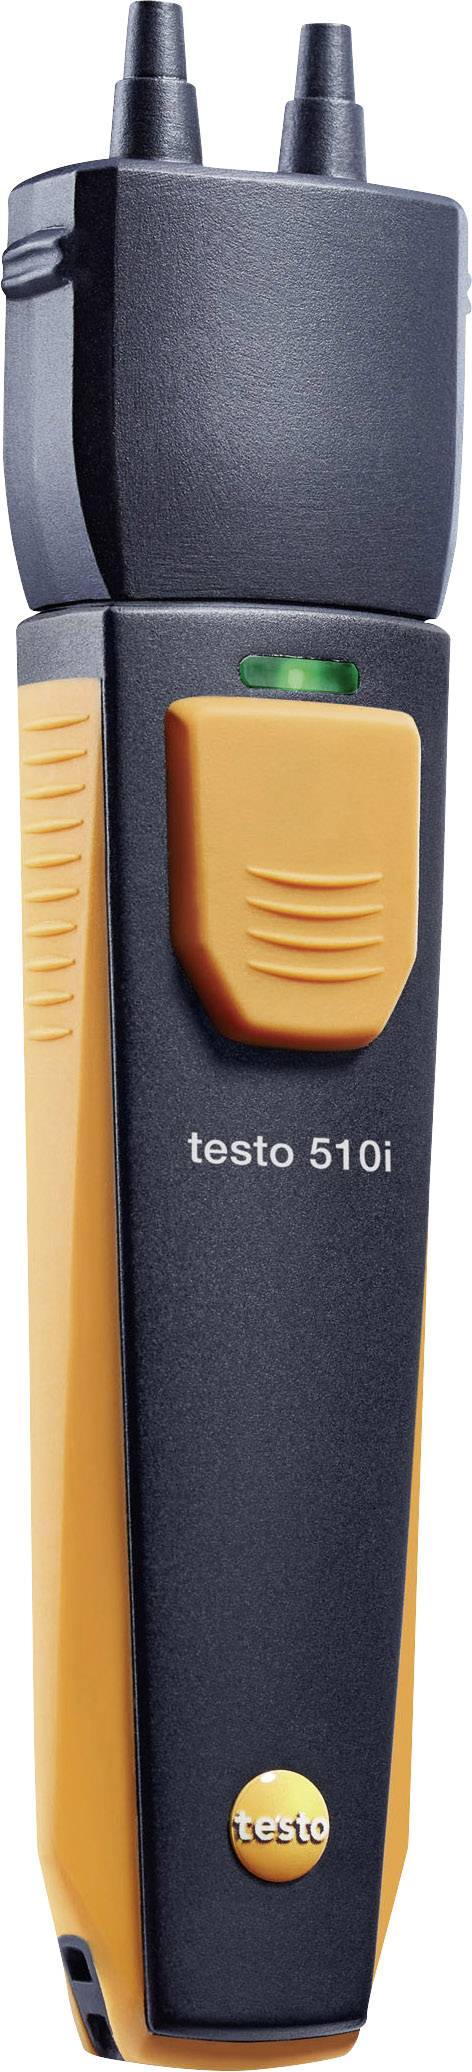 TESTO Druck-Messgerät testo 510i Smart Probes